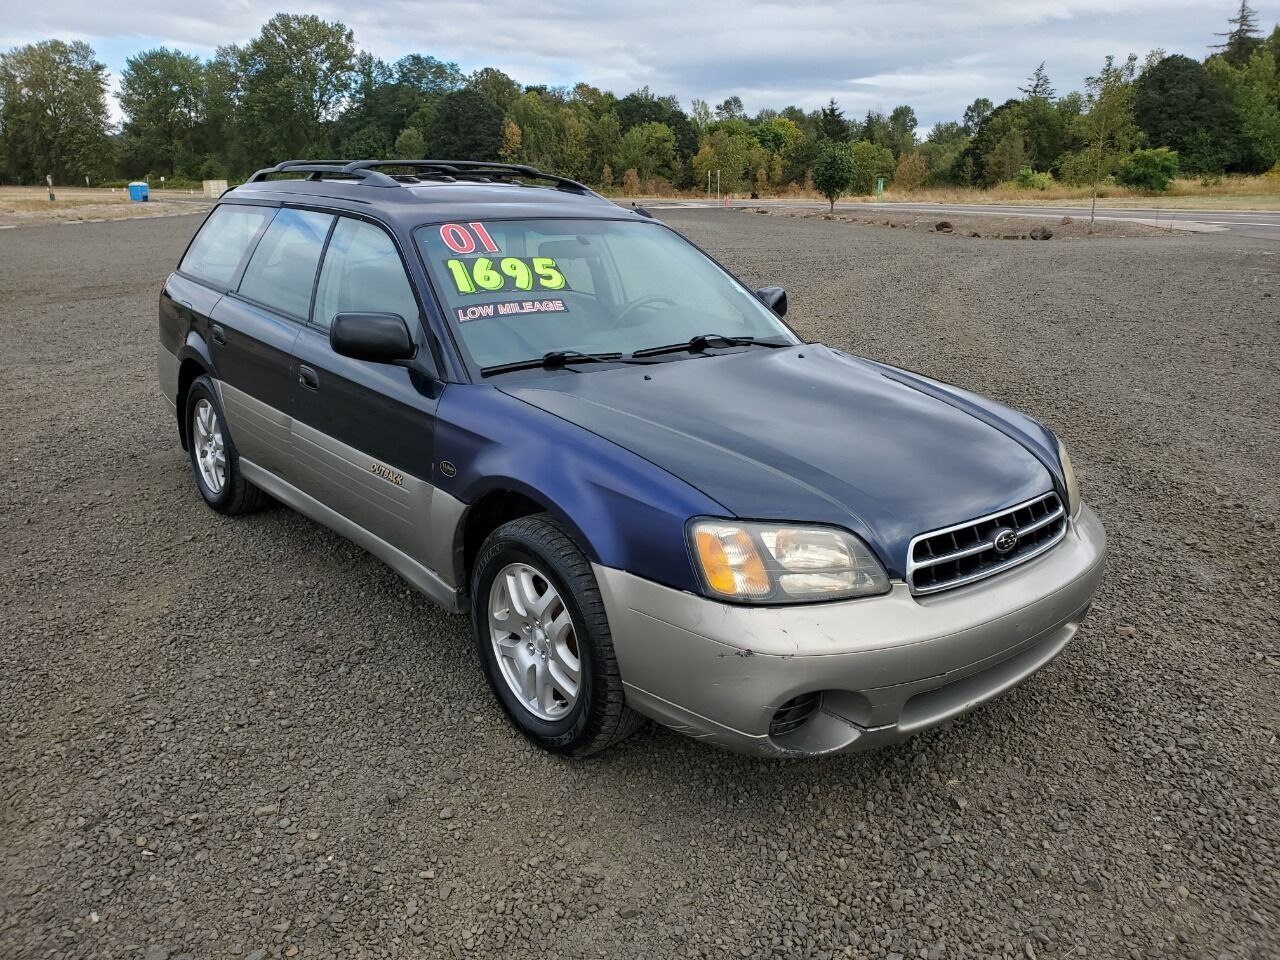 Used 2001 Subaru Outback for Sale (with Photos) CarGurus